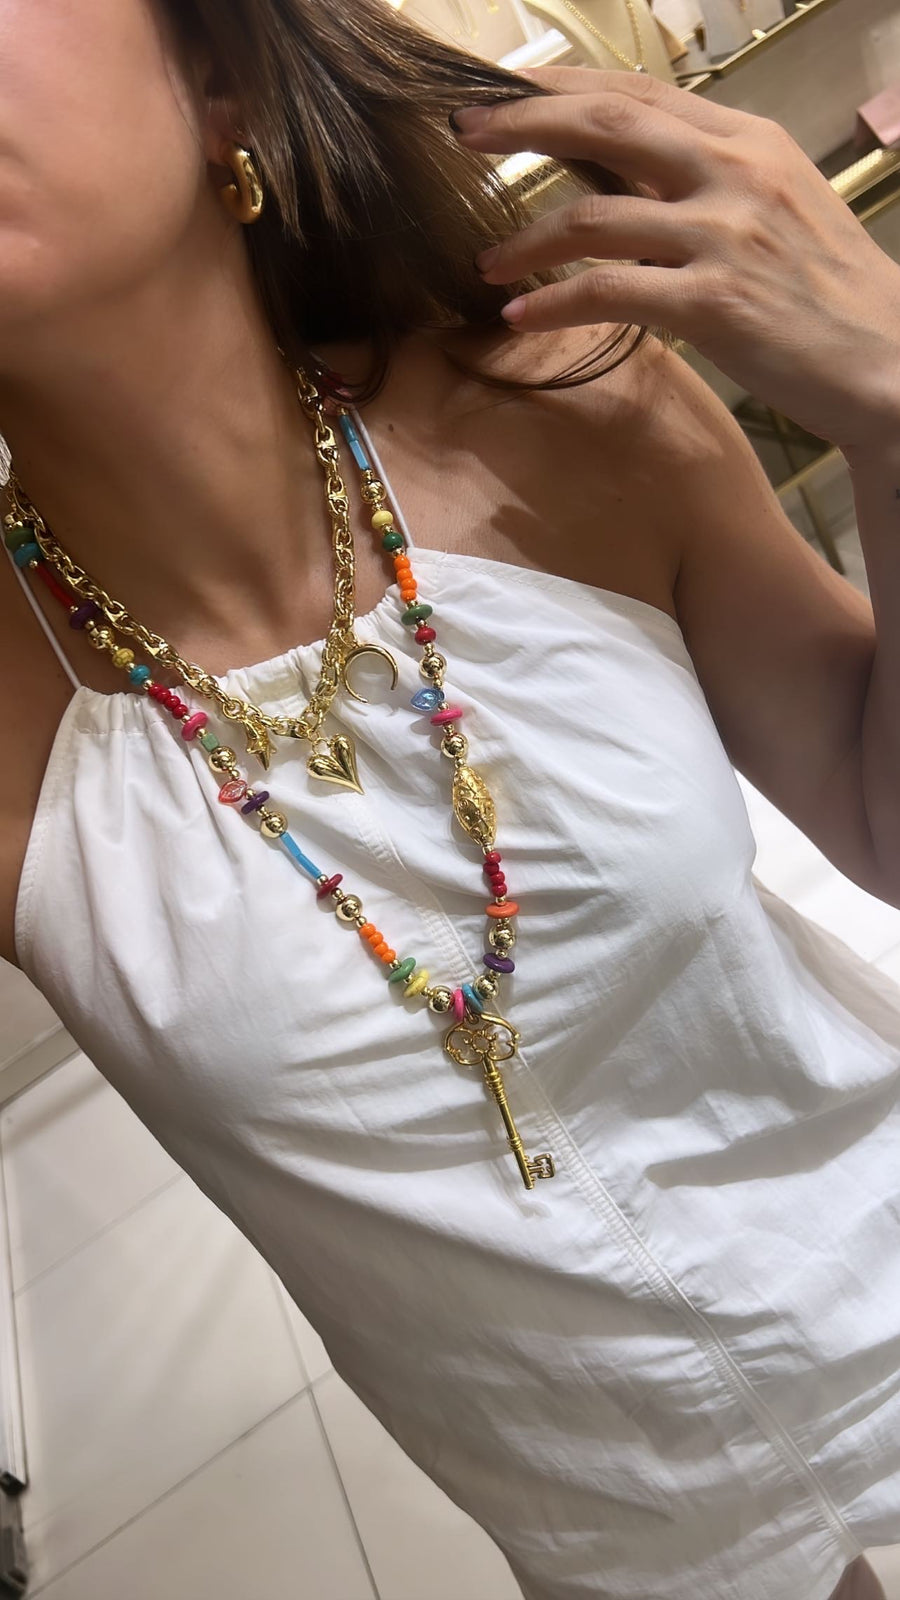 Colorful key pendant necklace